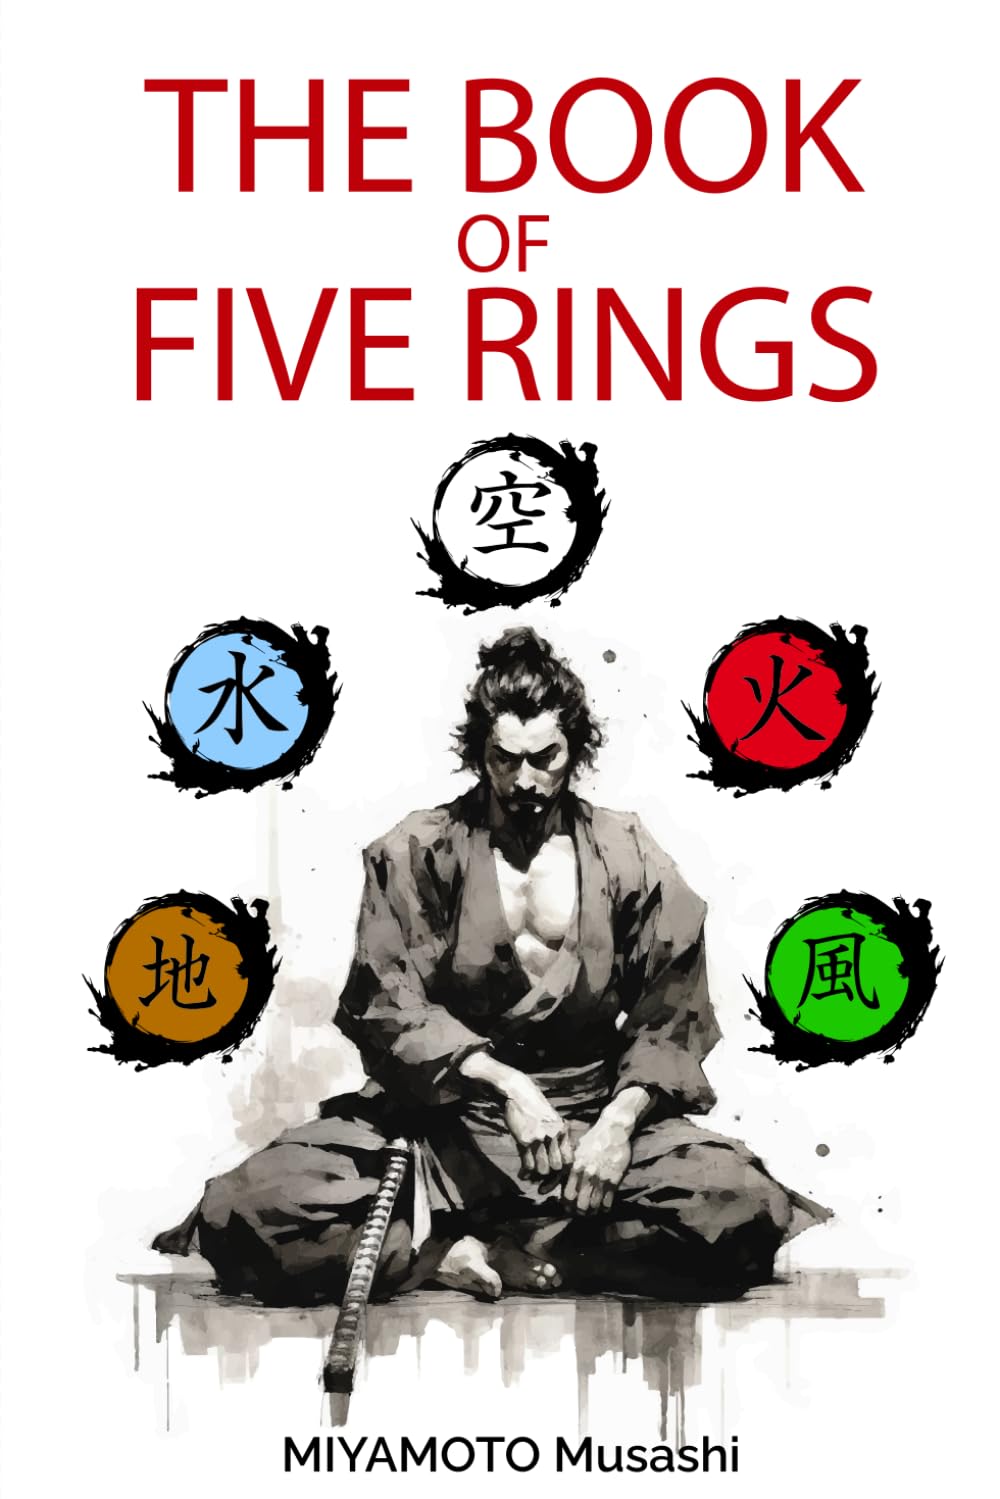 The book of five rings: +Biography of Miyamoto Musashi, Illustrated Edition, Modern Translation